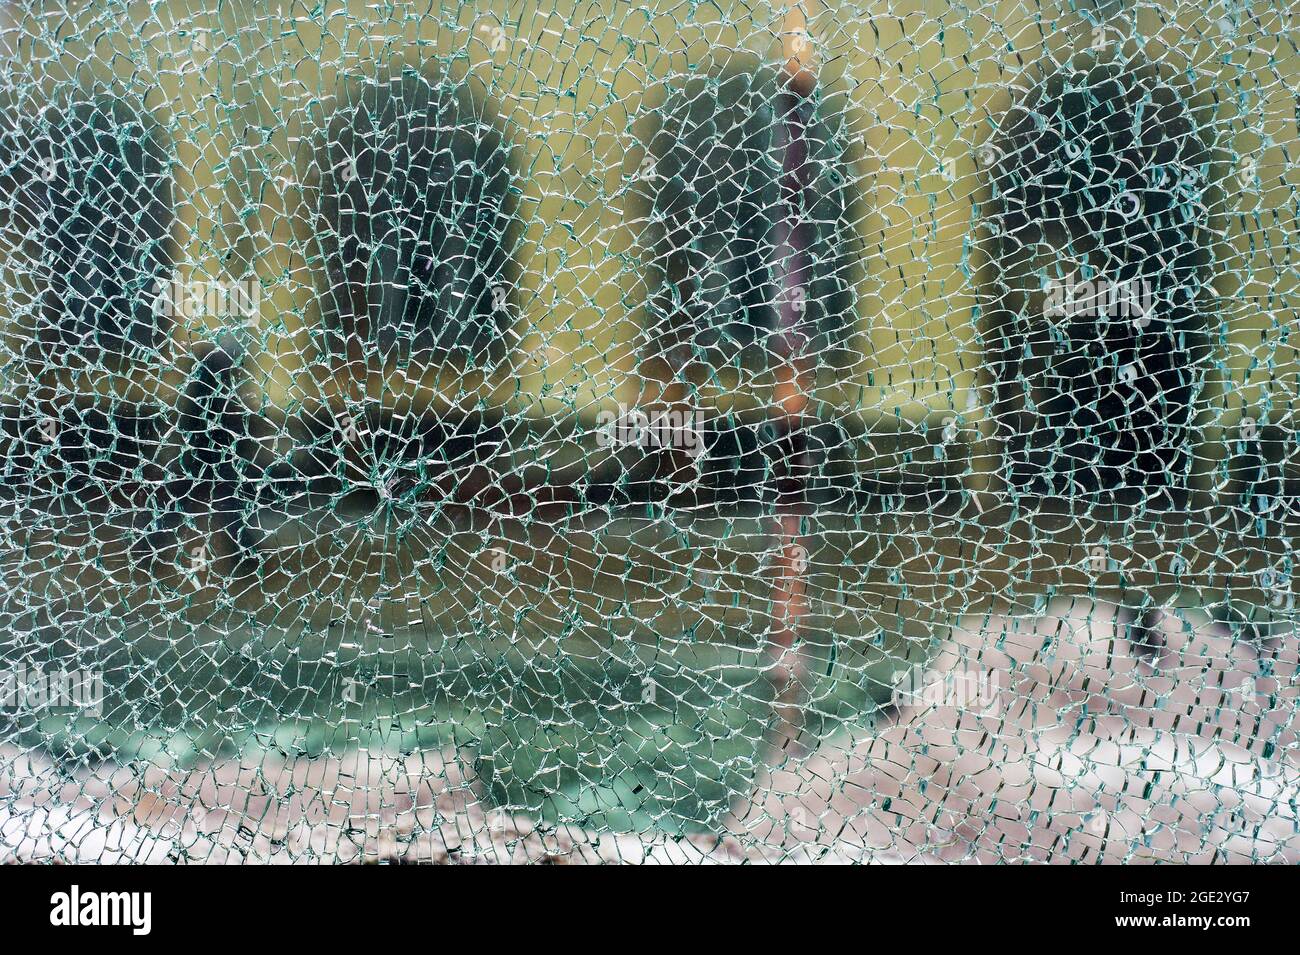 View of city through cracked glass, horizontal view Stock Photo